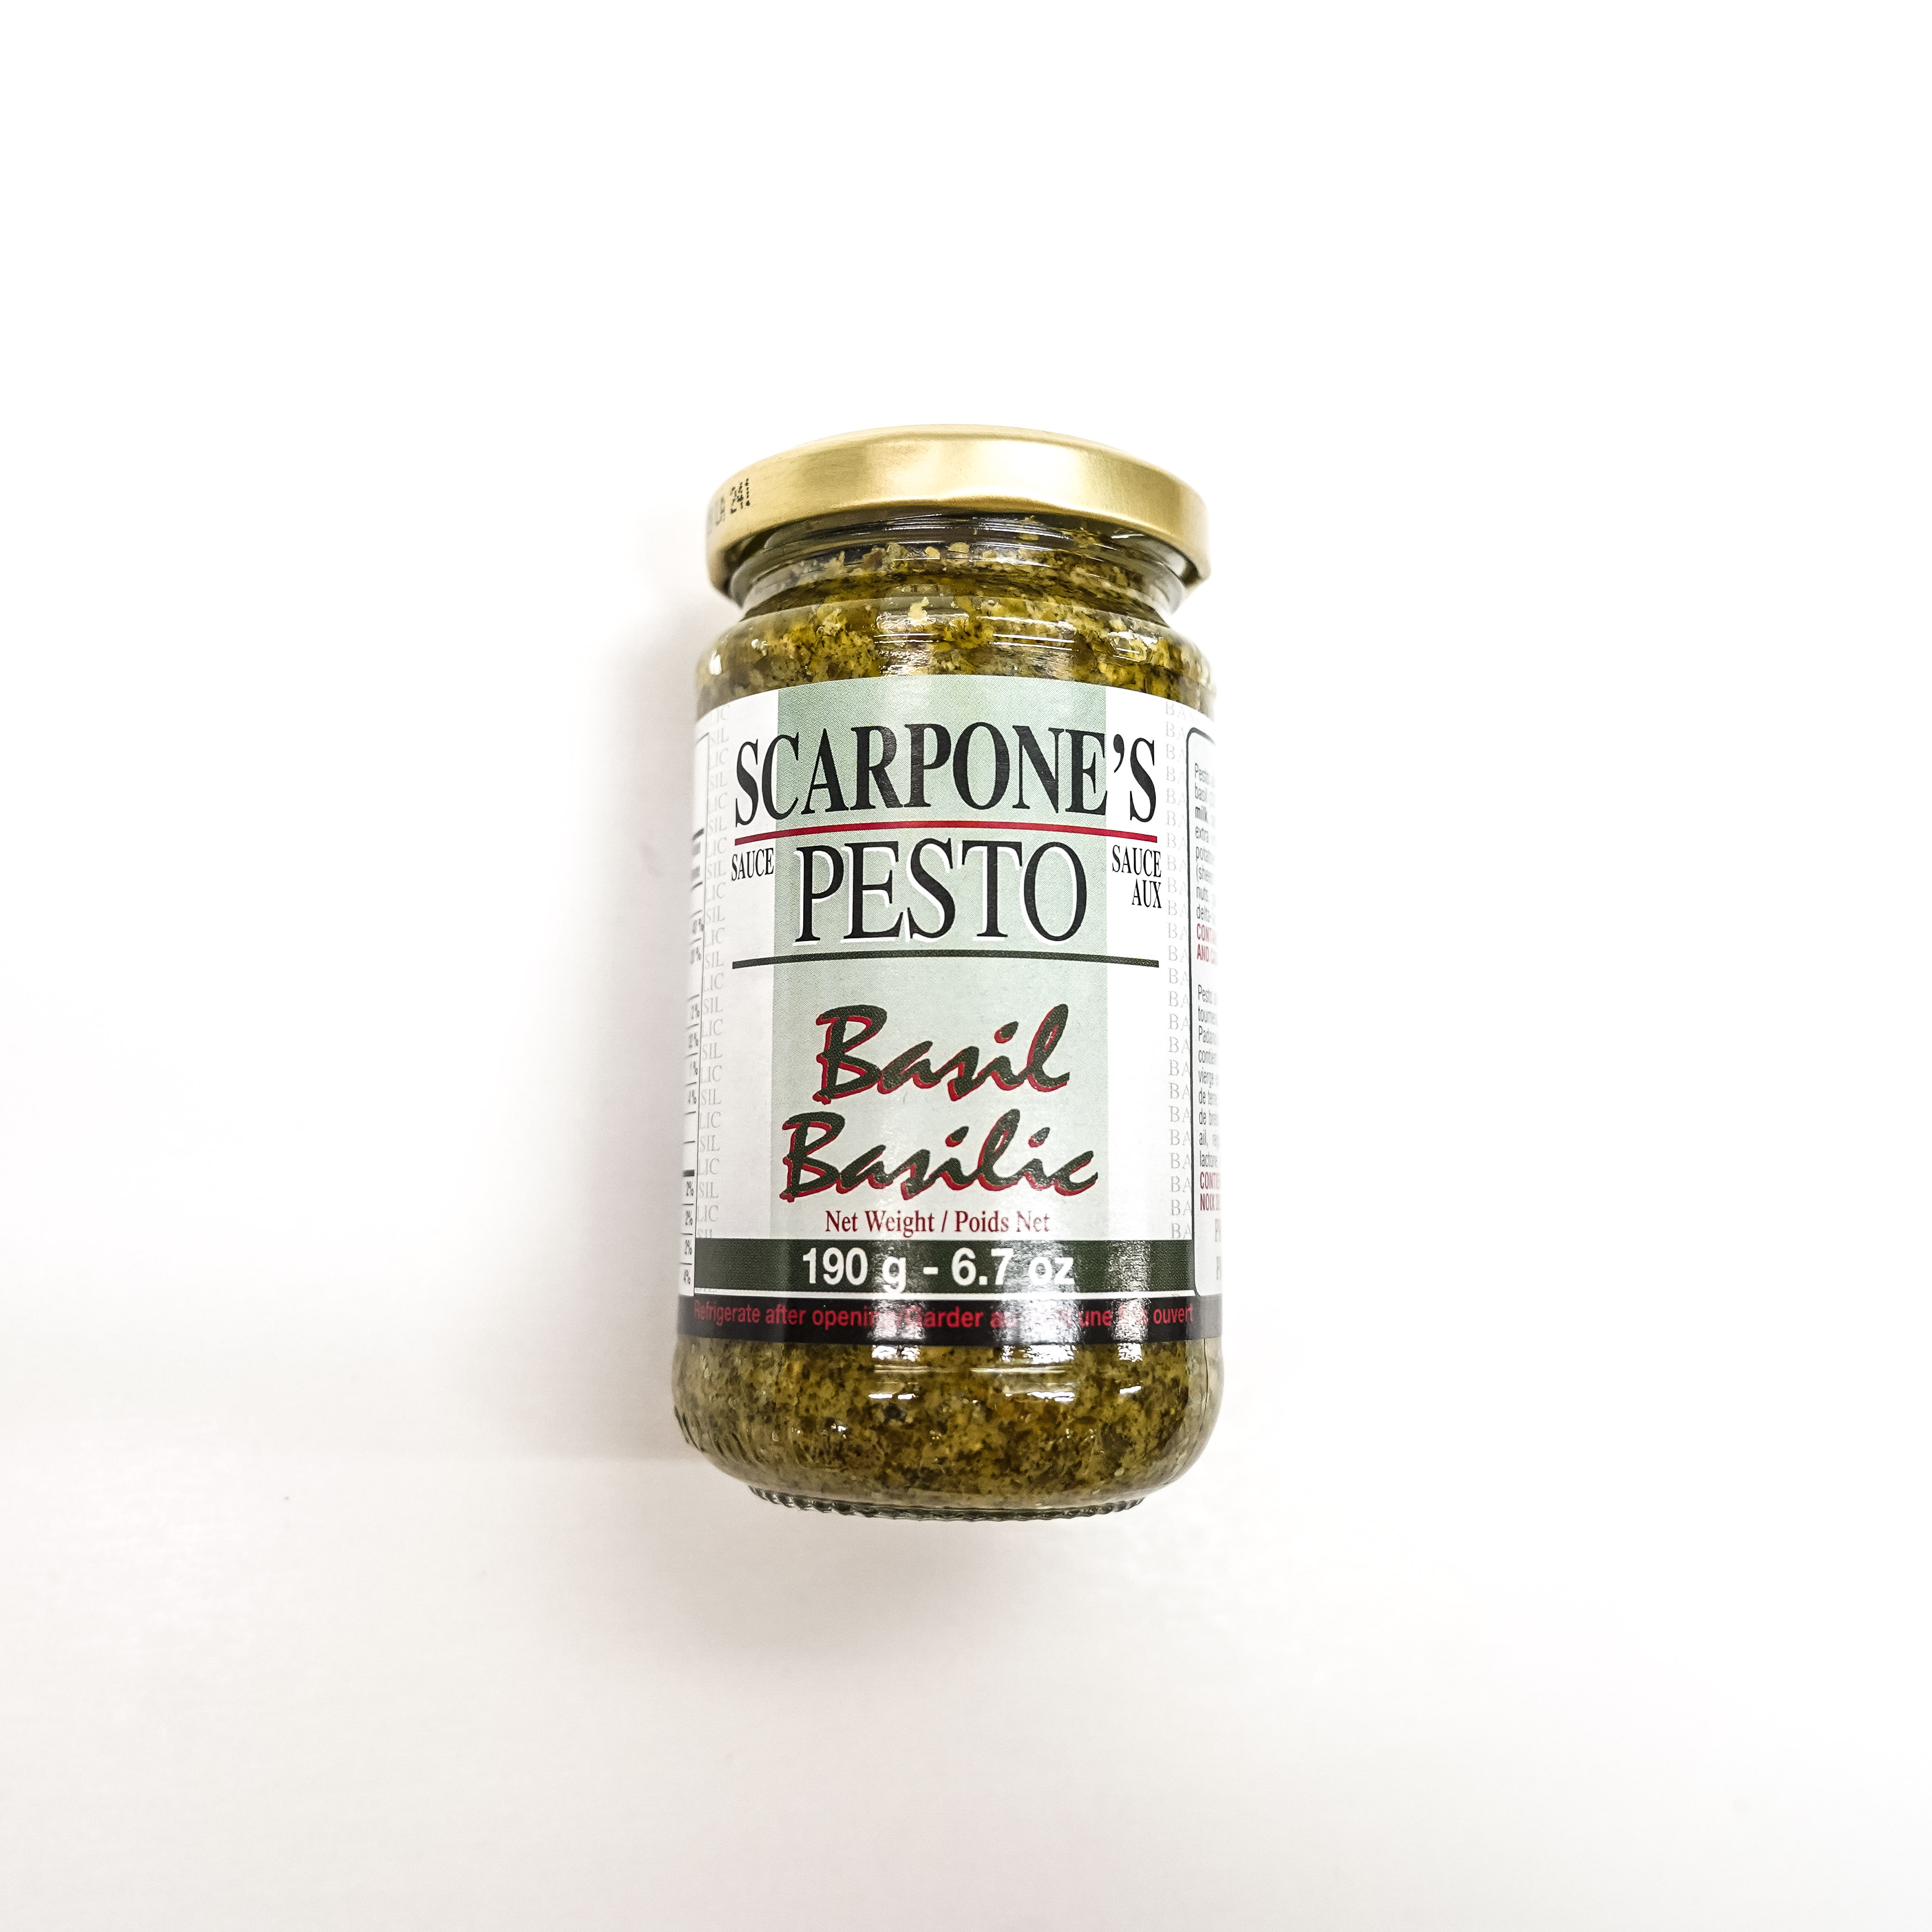 Scarpone's Basil Pesto